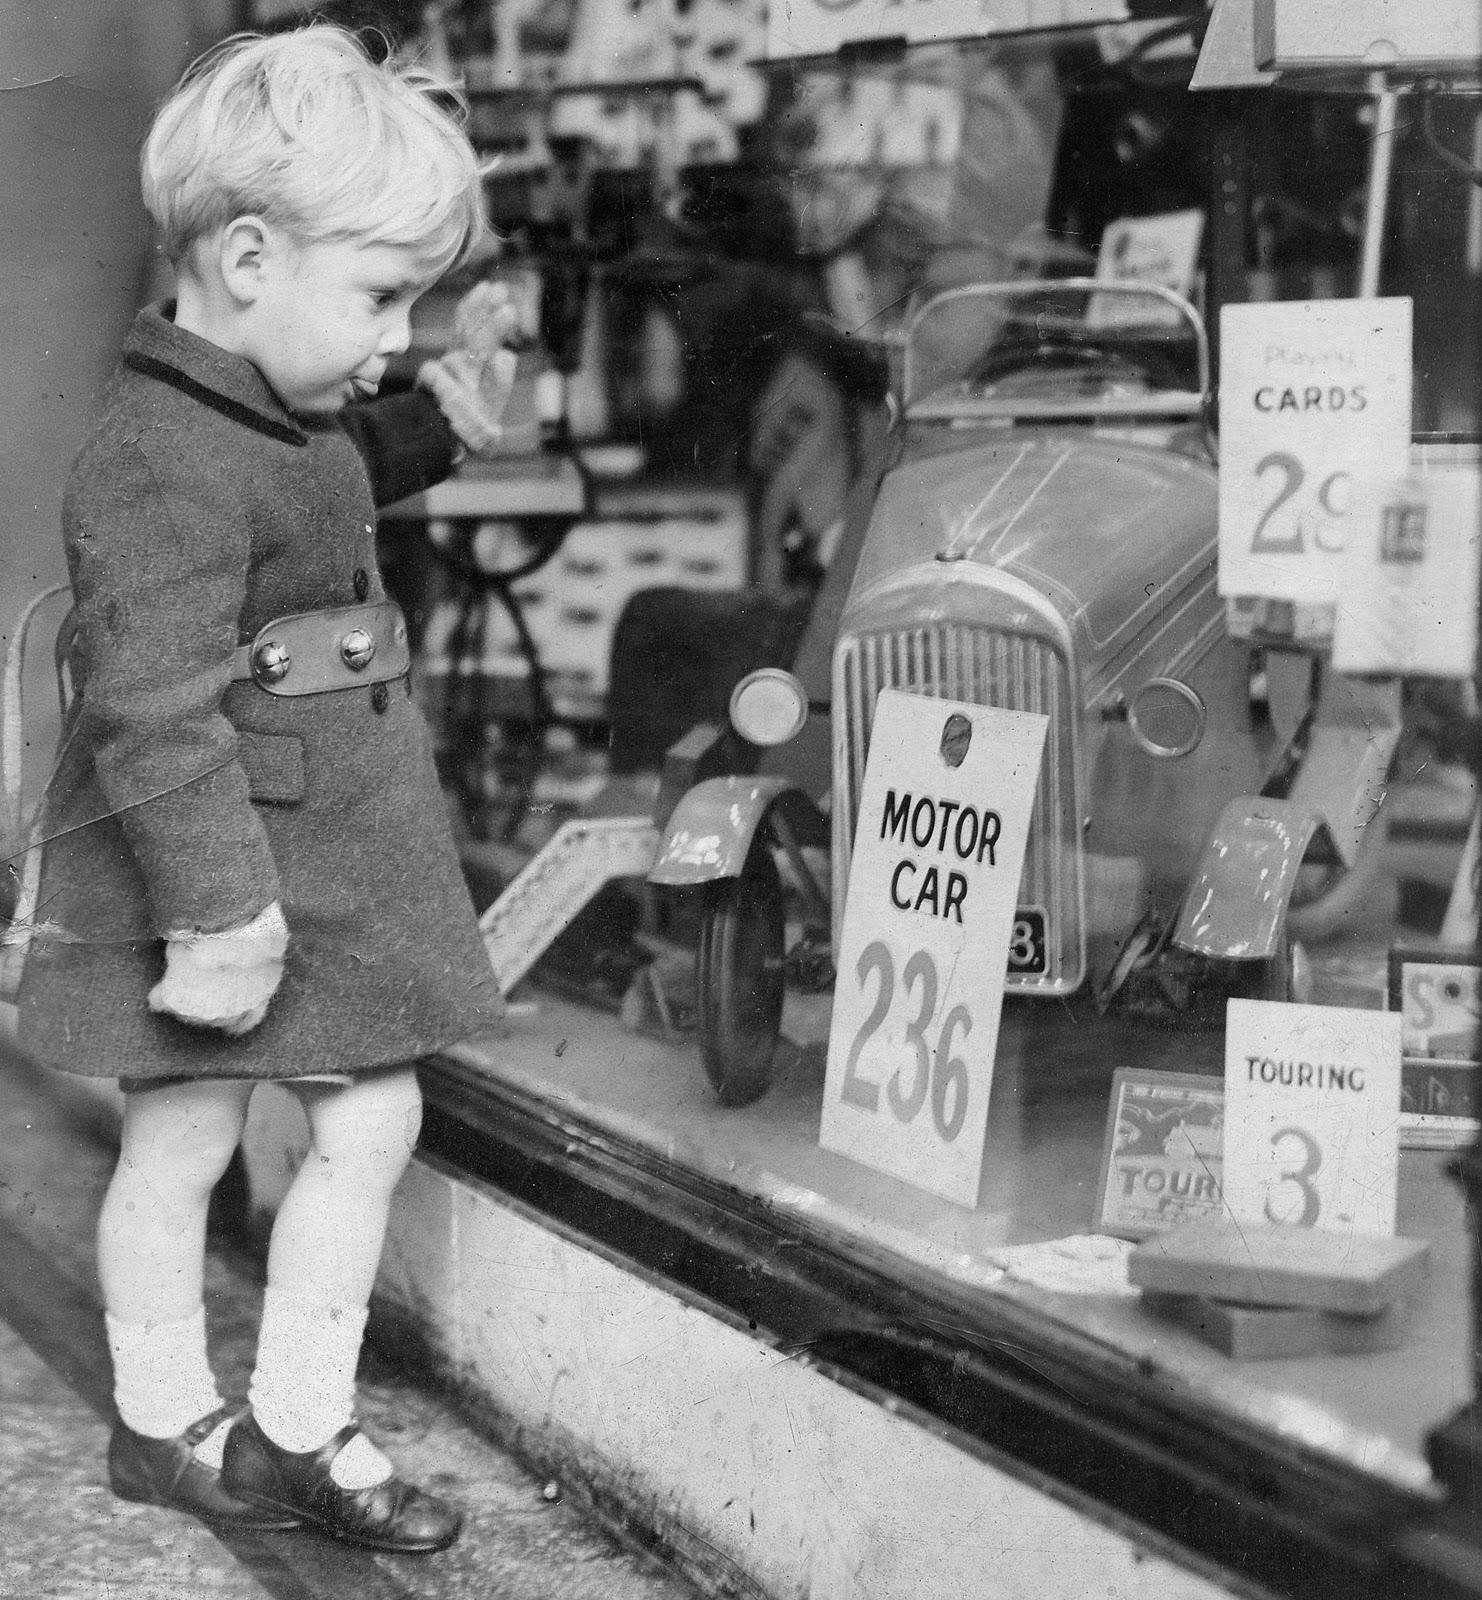 Vintage photo a boy gazing to a window shop for a toy car